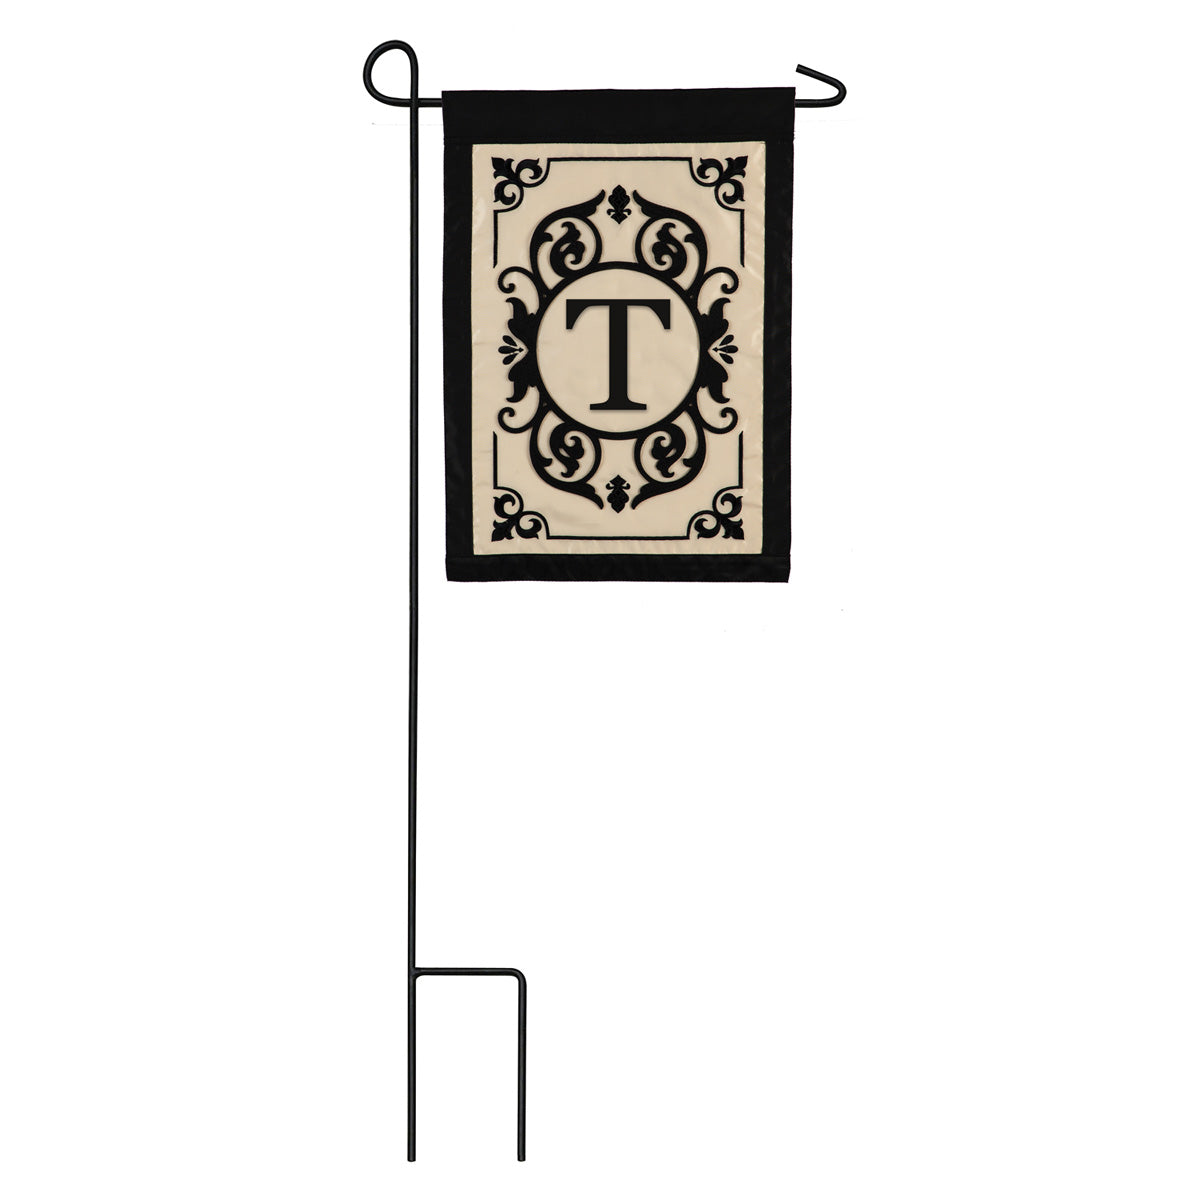 Cambridge Monogram Garden Applique Flag, "T"